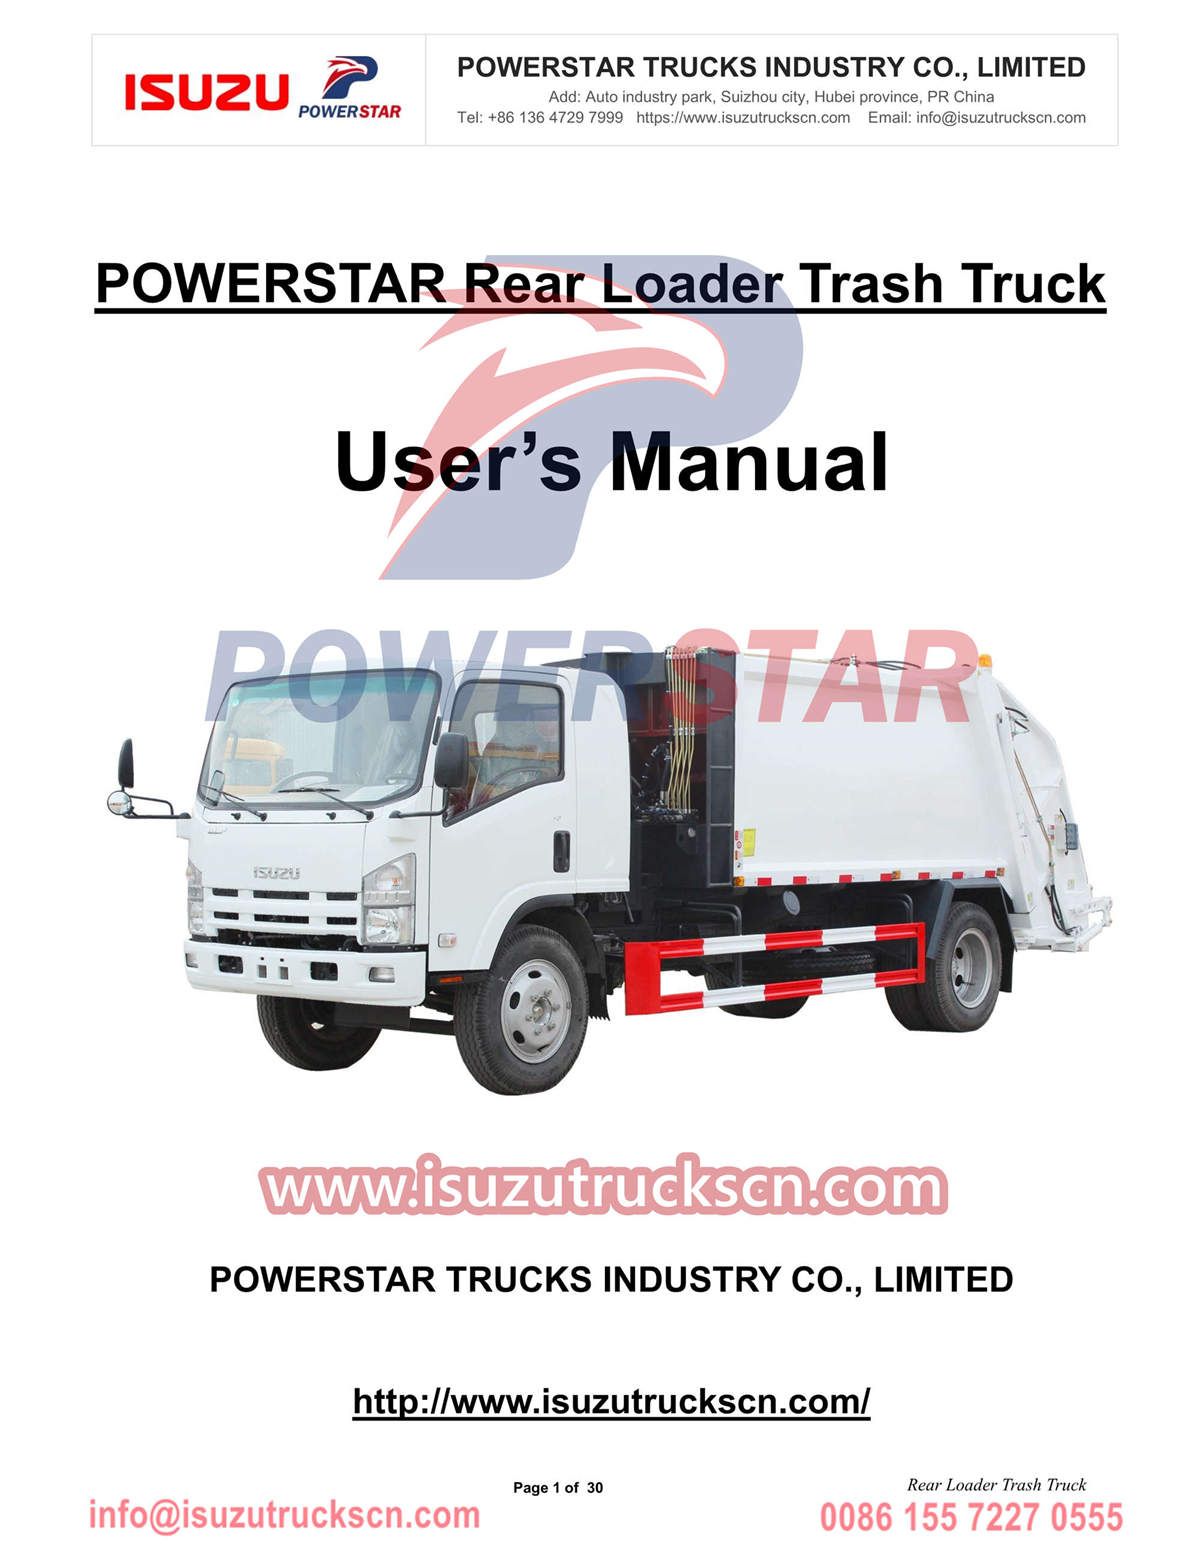 Ethiopia POWERSTAR ISUZU 700P Rear Loader Trash Truck manual